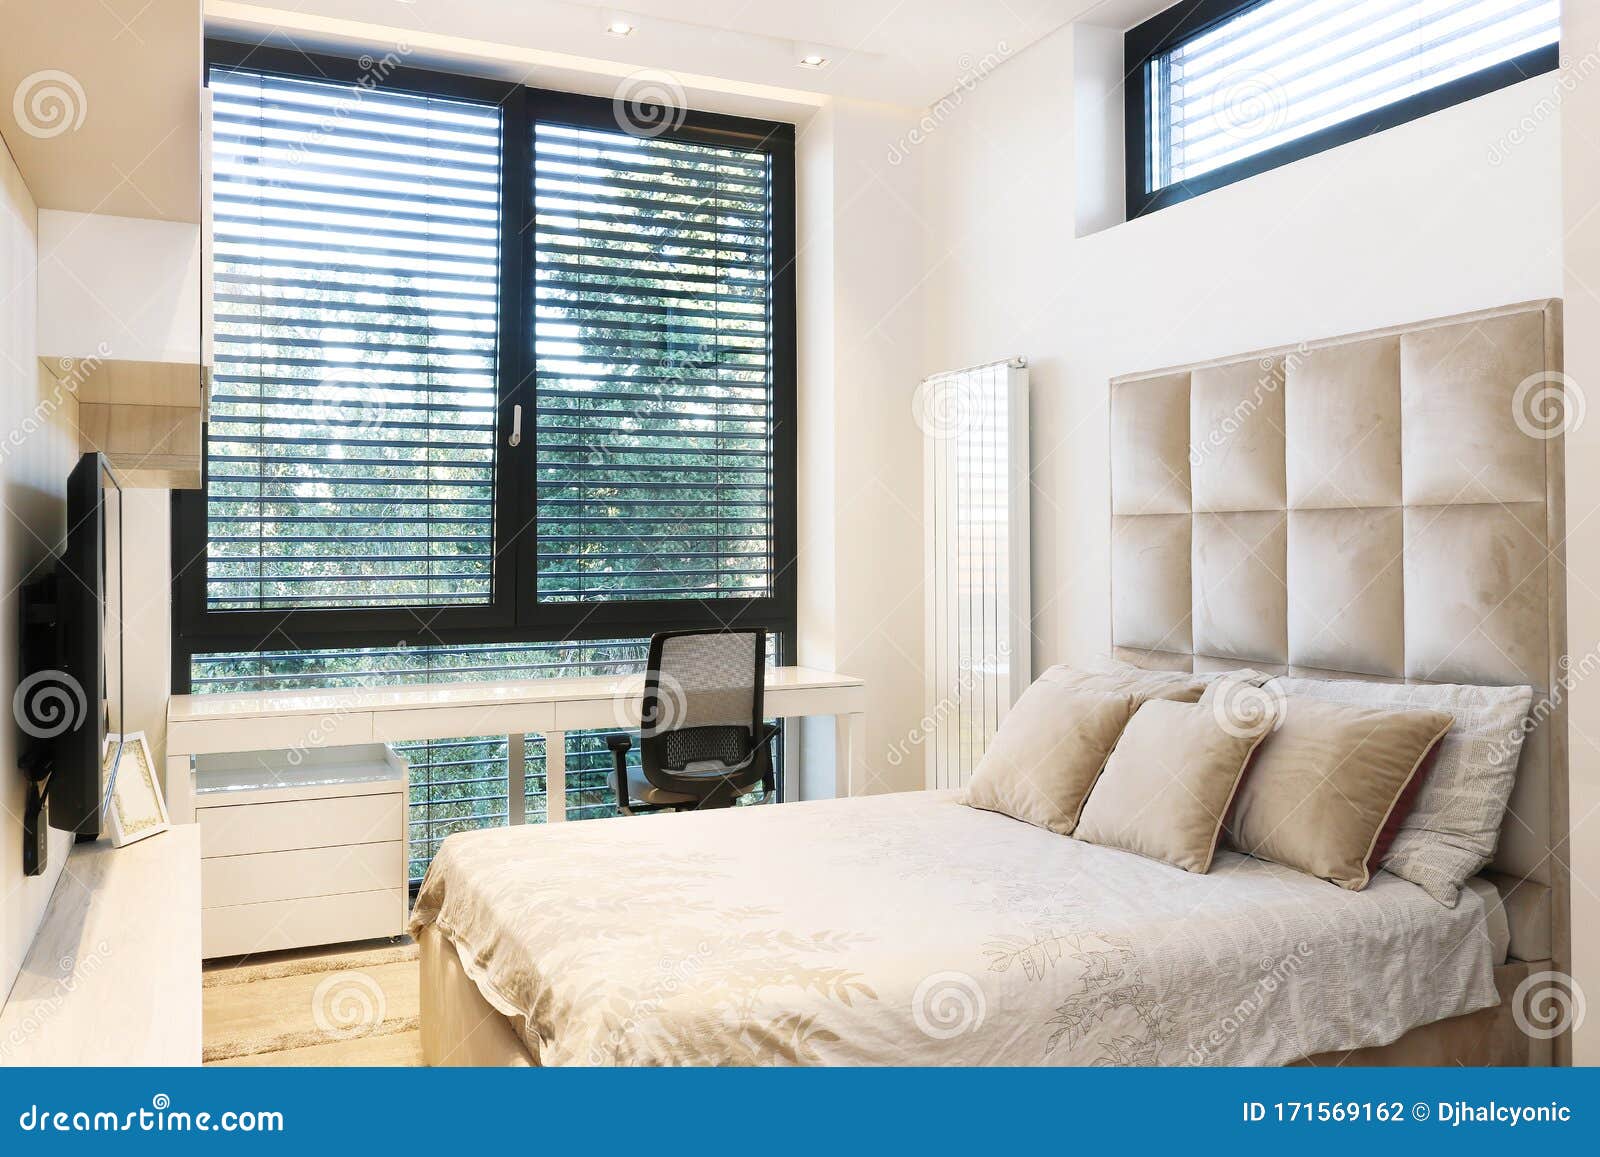 Stylish Bedroom with Comfortable Bad Stock Photo - Image of ...